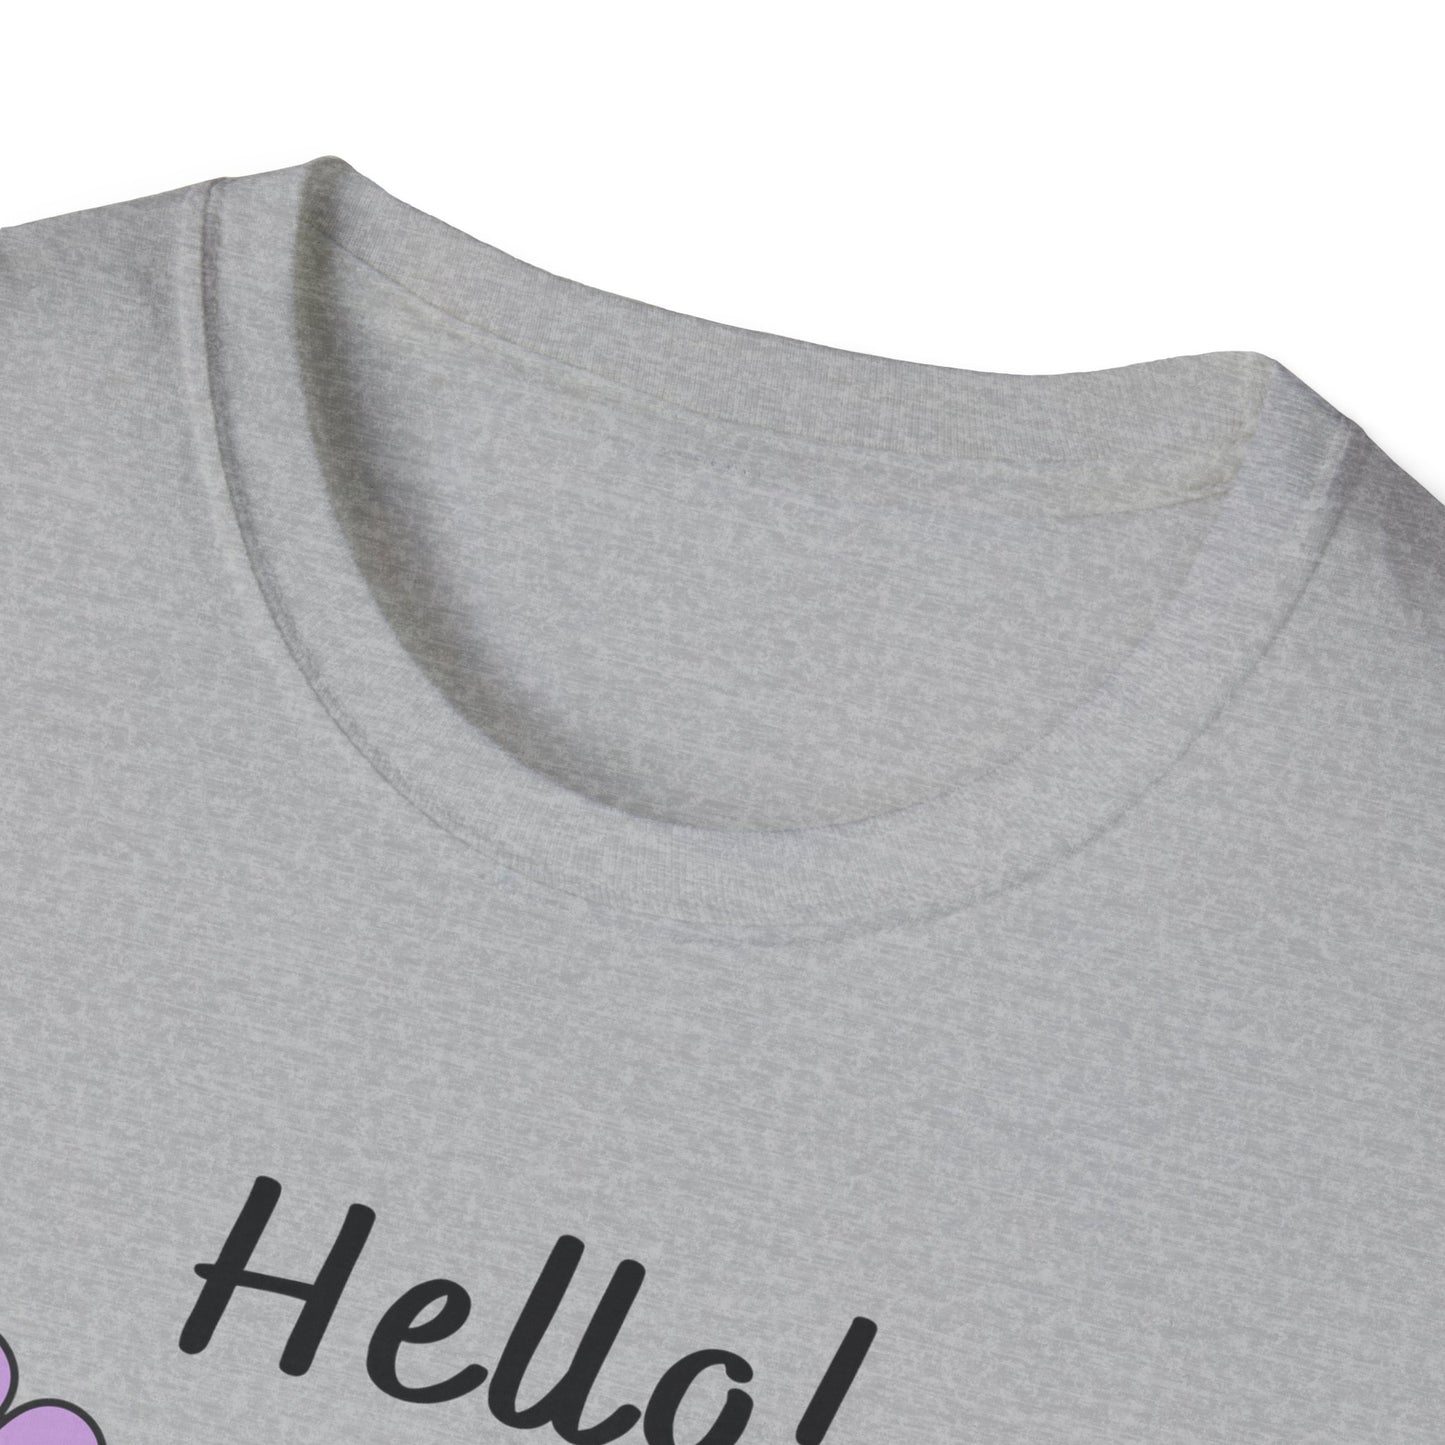 "Hello I'm Autistic Not Rude" Unisex Softstyle T-Shirt